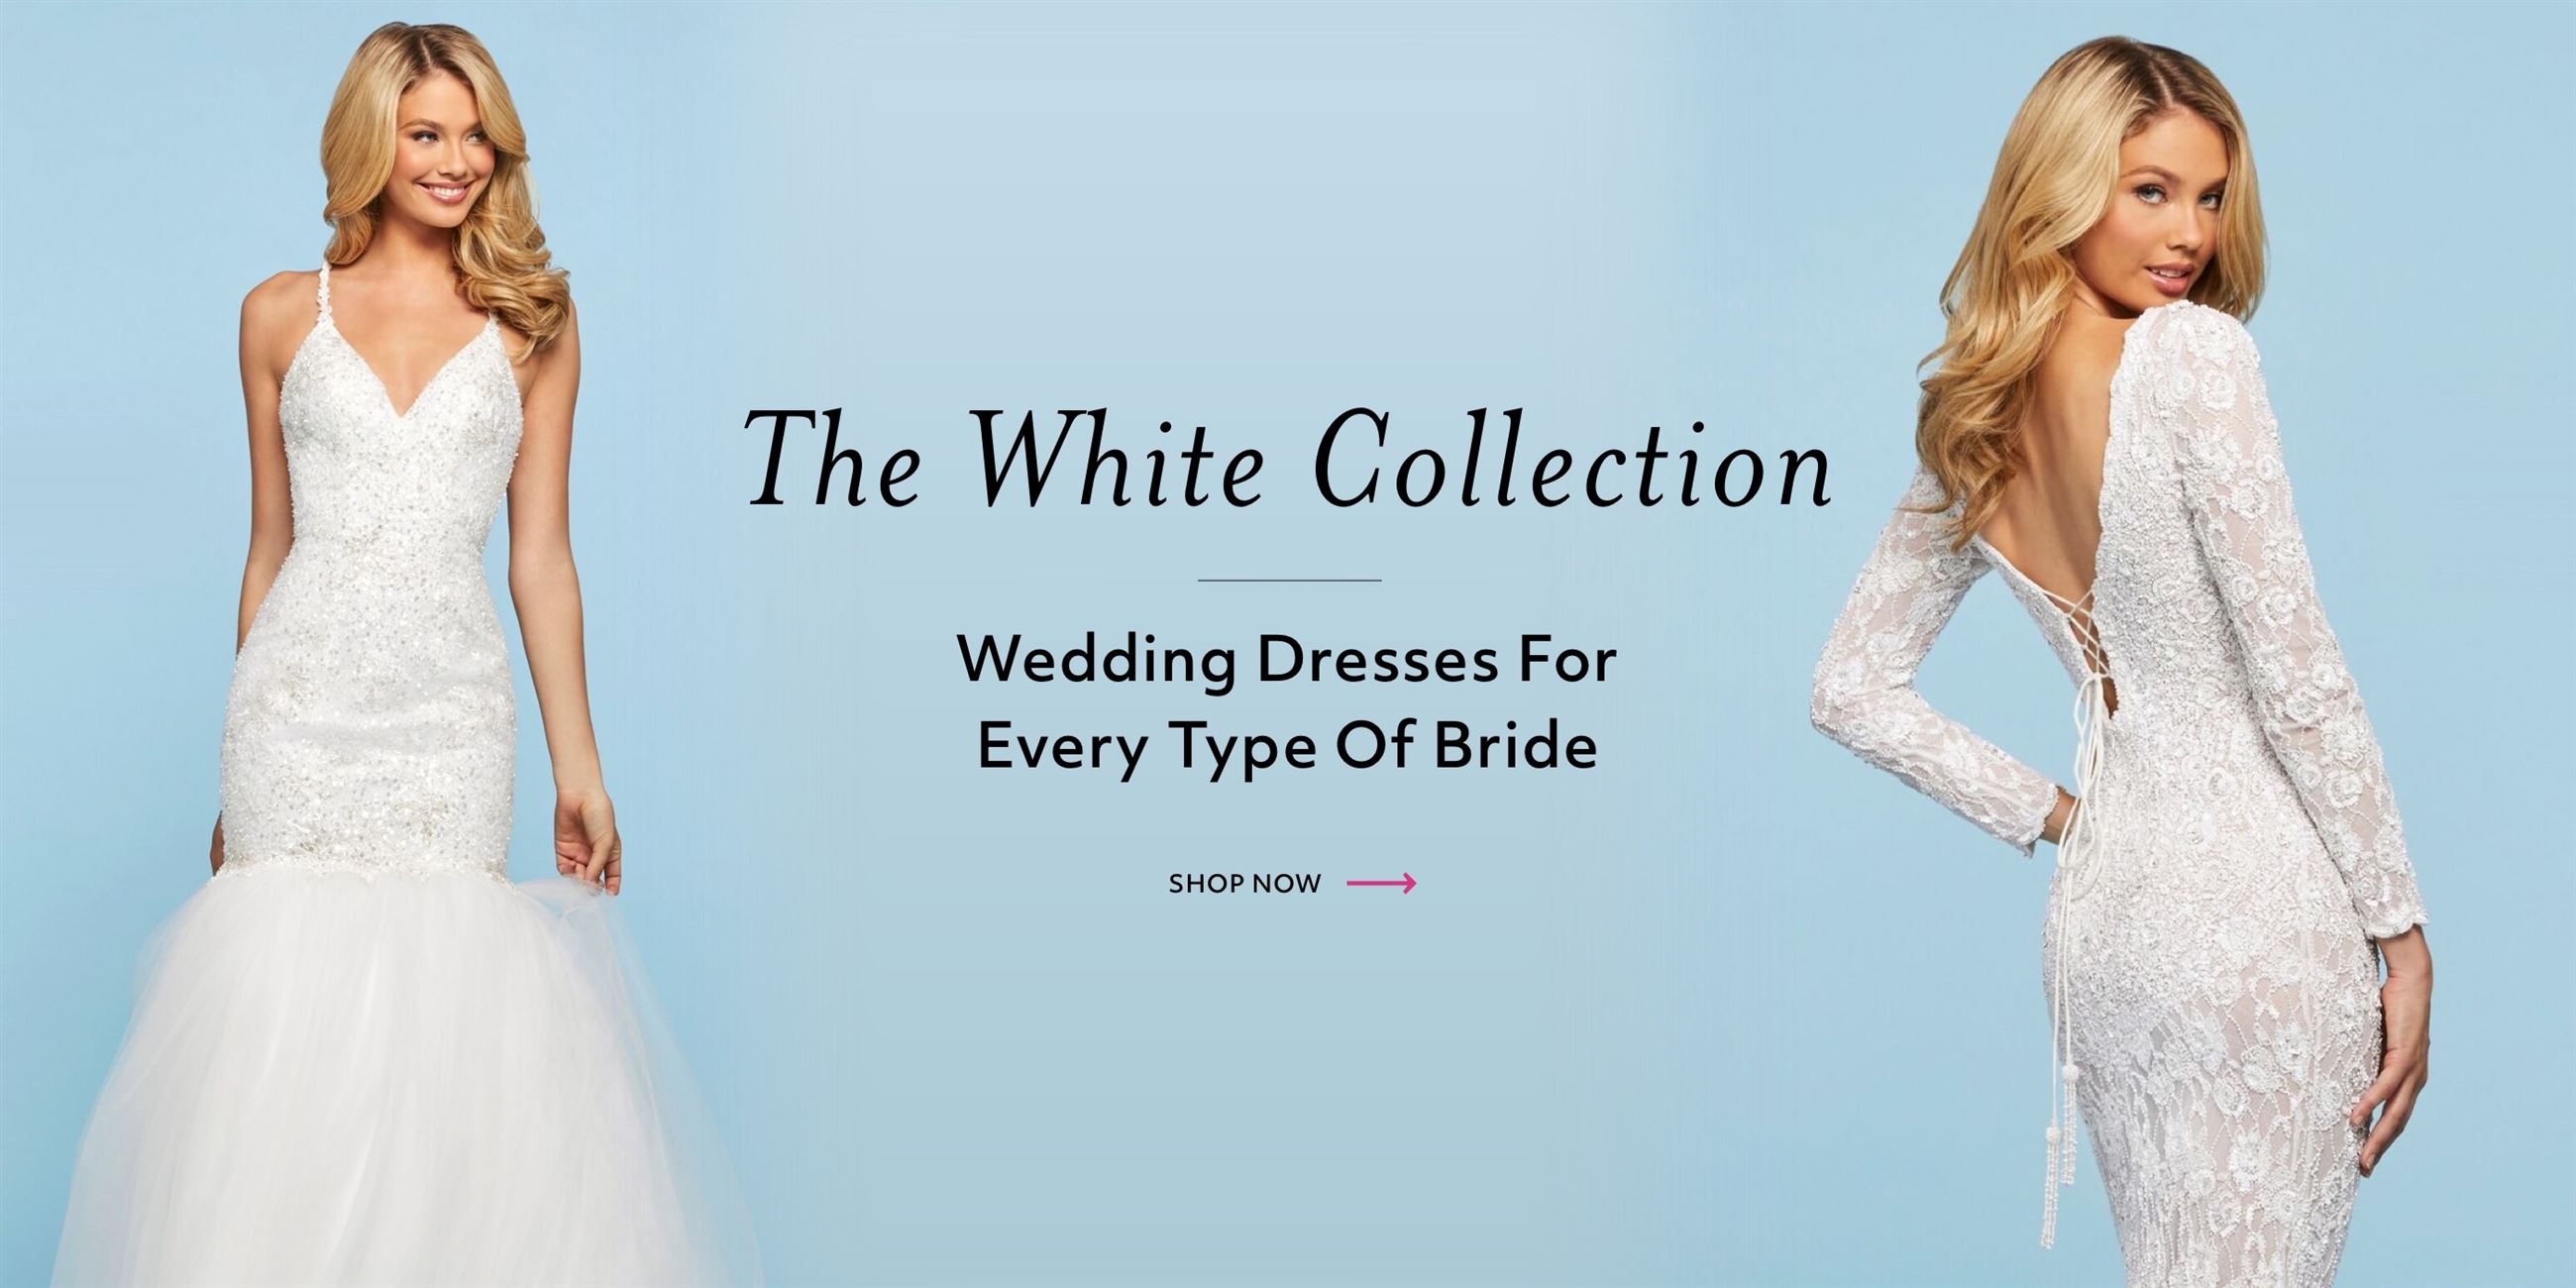 The White Collection. Wedding Dresses. Desktop Image.